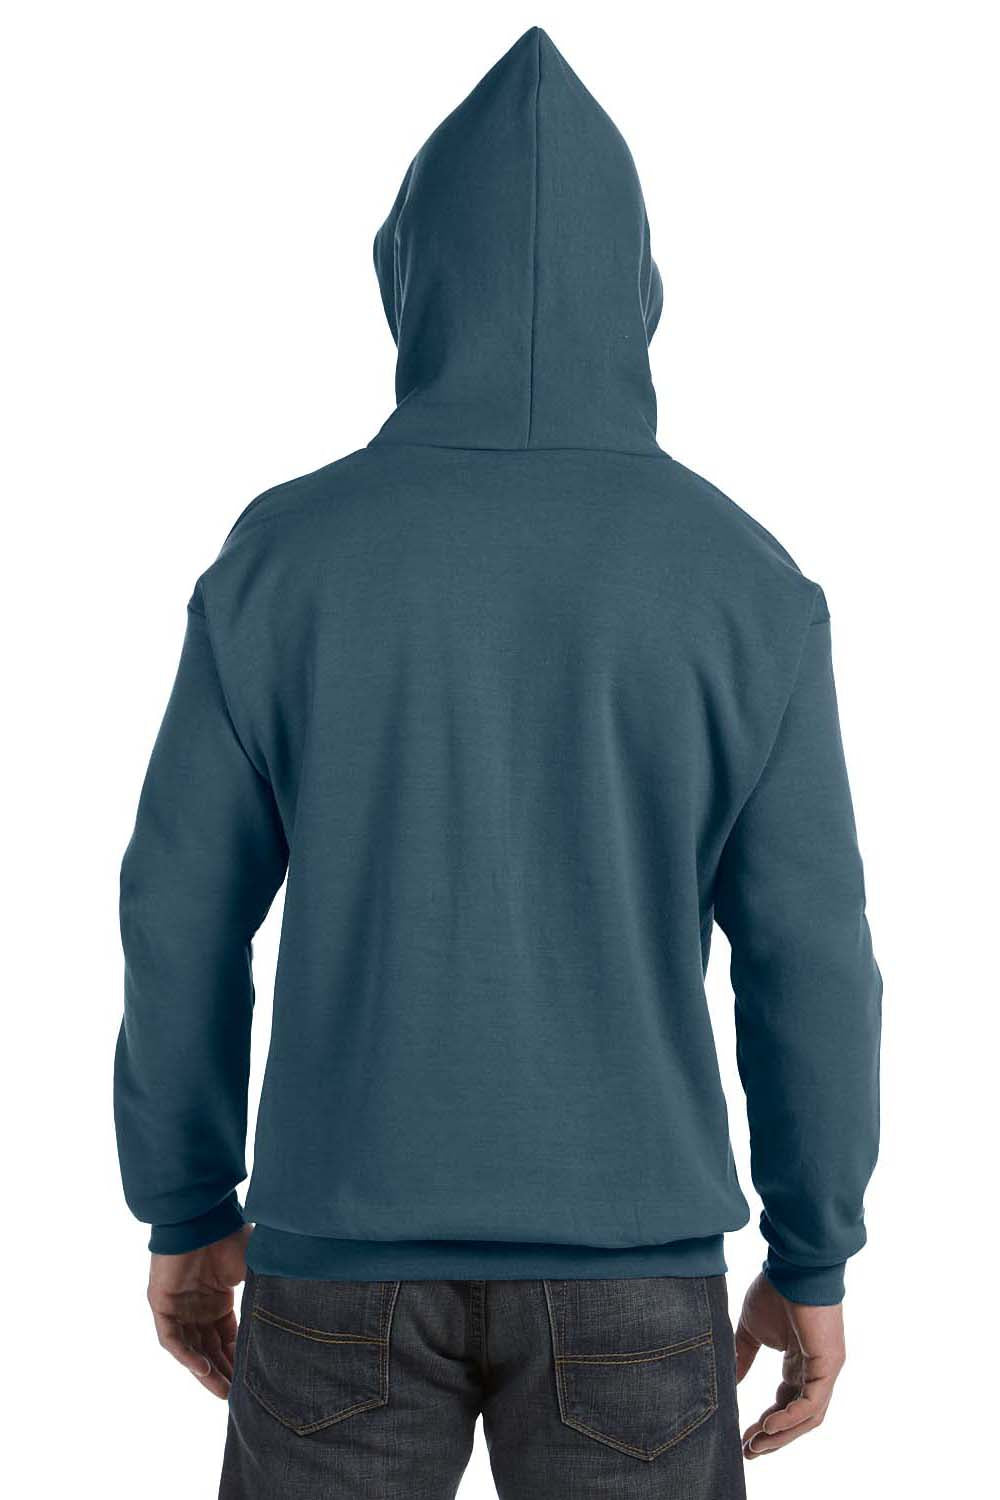 Hanes P170 Mens EcoSmart Print Pro XP Hooded Sweatshirt Hoodie Denim Blue Back